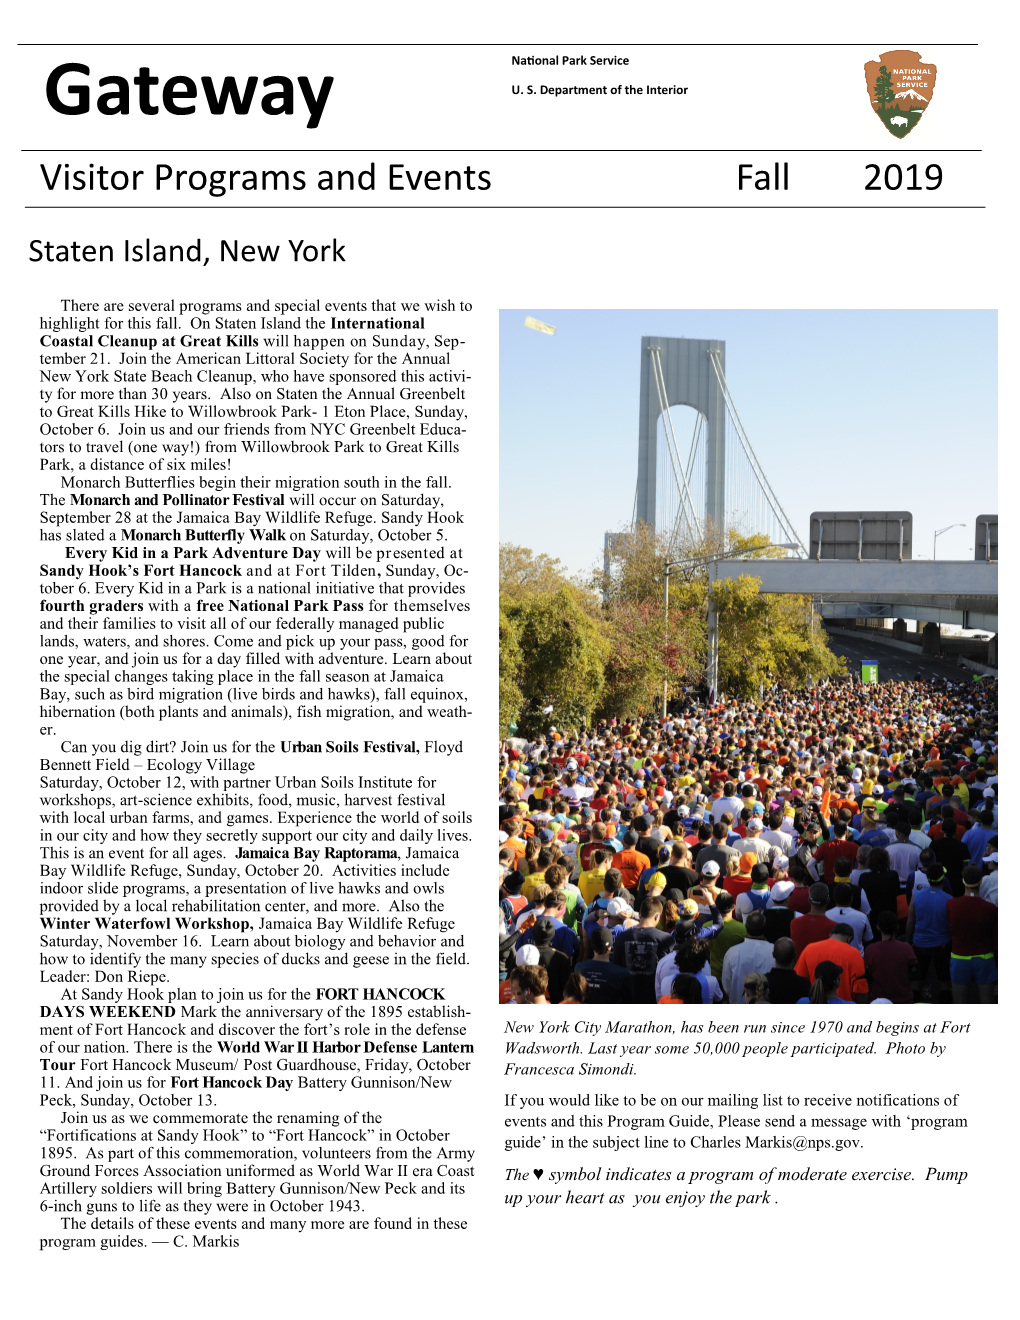 Fall 2019 Staten Island Visitor Program Guide